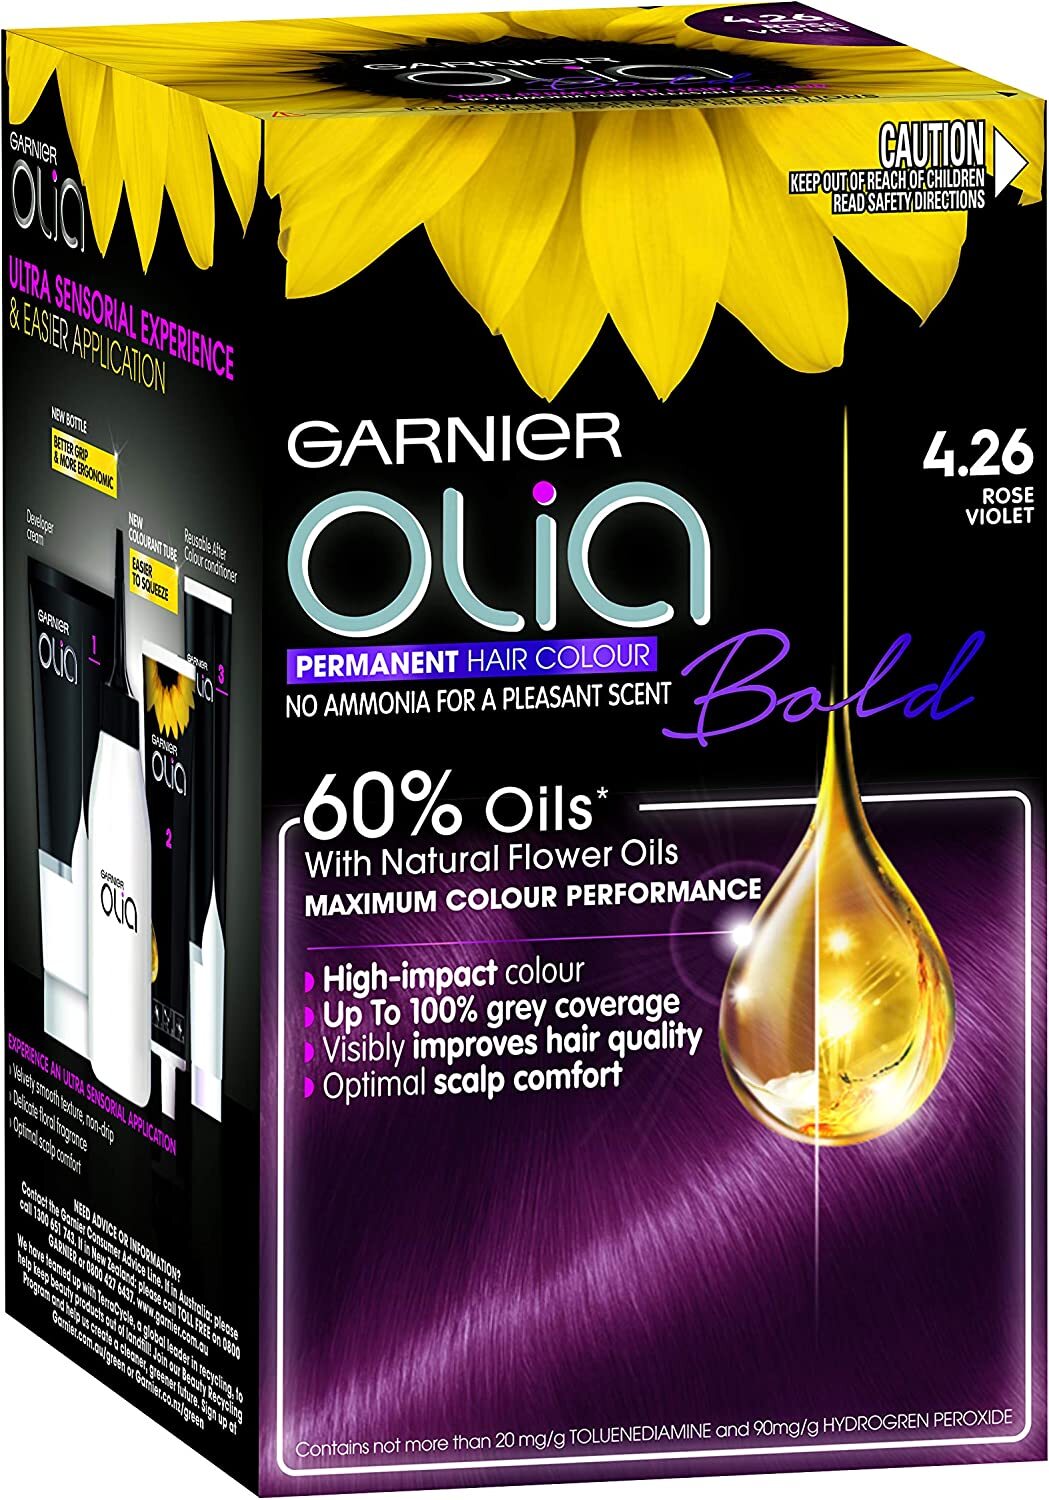 Garnier Olia Permanent Hair Colour Bold No Ammonia  Rose Violet